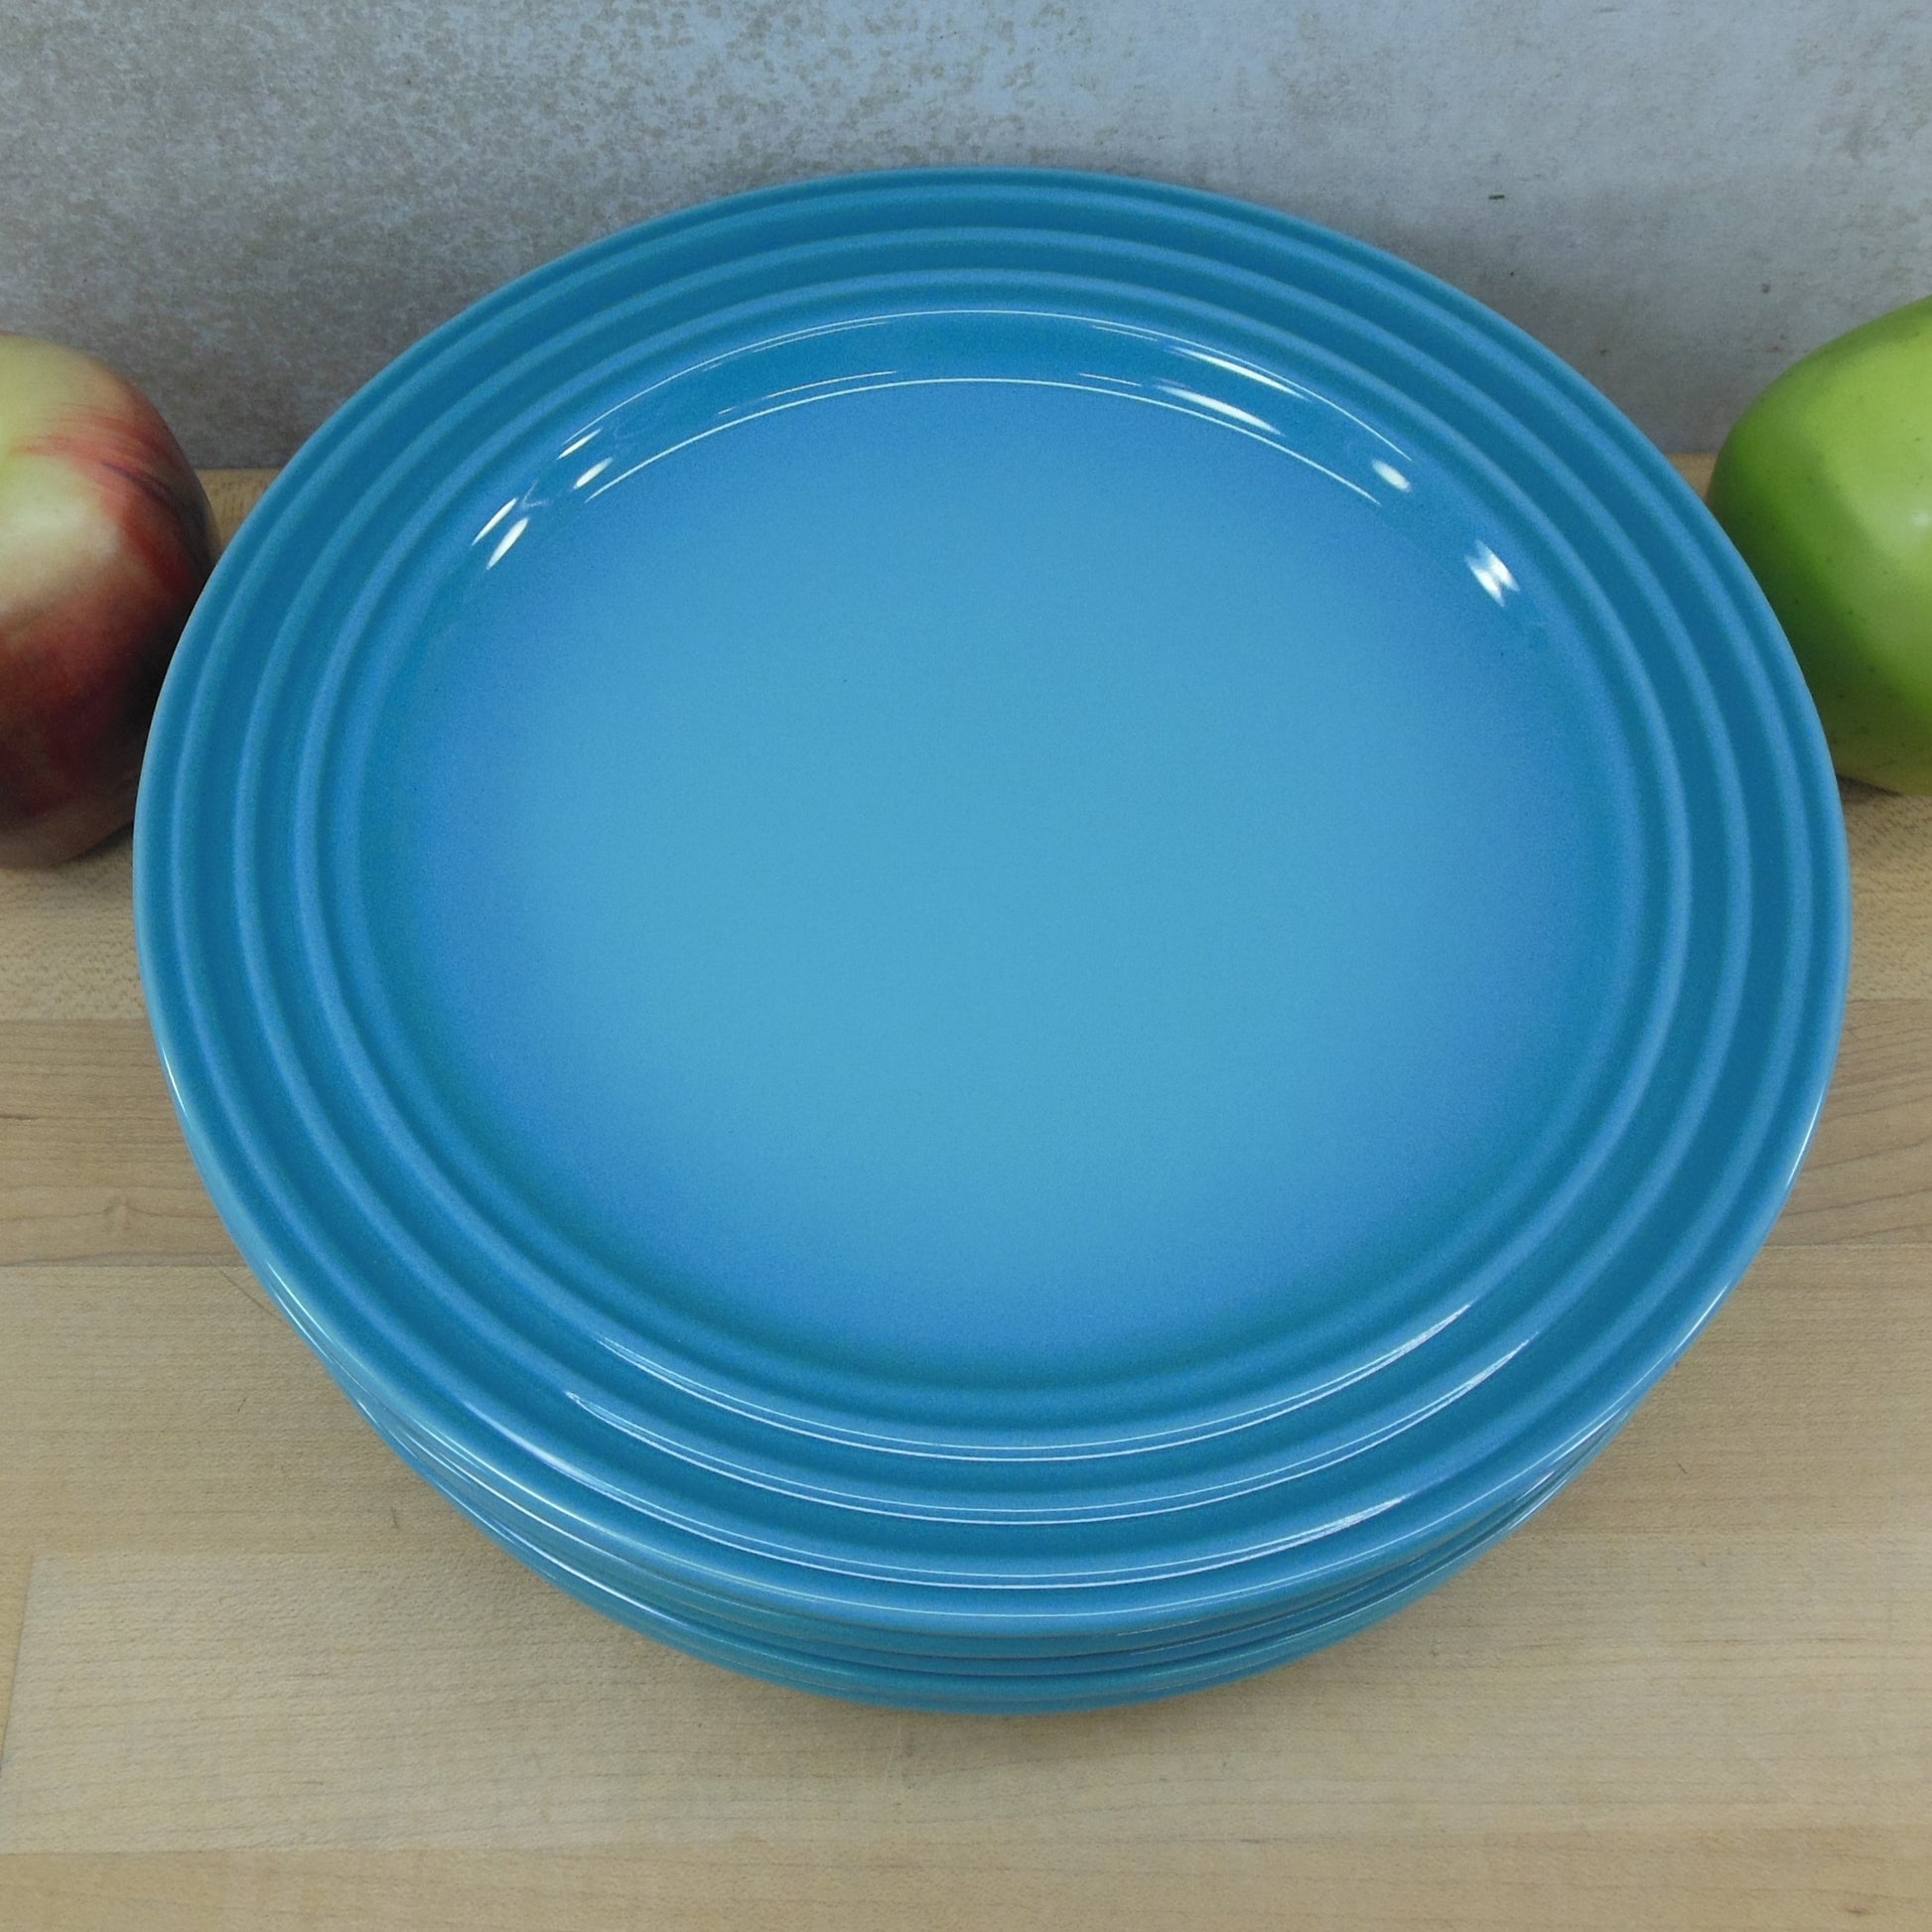 Le Creuset Stoneware Caribbean Blue Teal - 6 Salad Plates 8.5" teal aqua